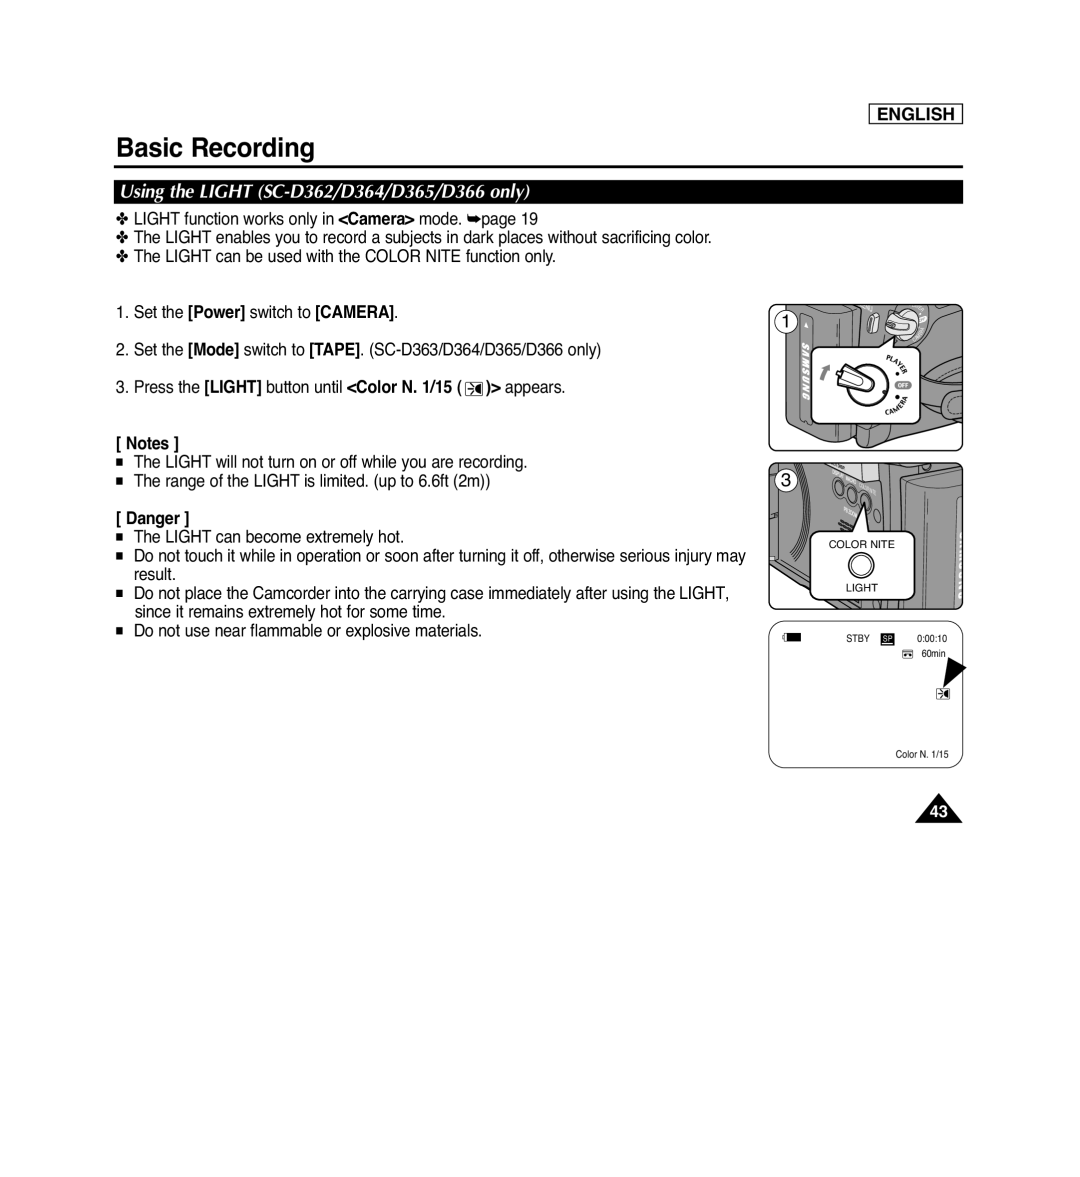 Samsung SC-D263, SC-D366, SC-D364 manual Using the LIGHT SC-D362/D364/D365/D366 only, Danger, Basic Recording, English 